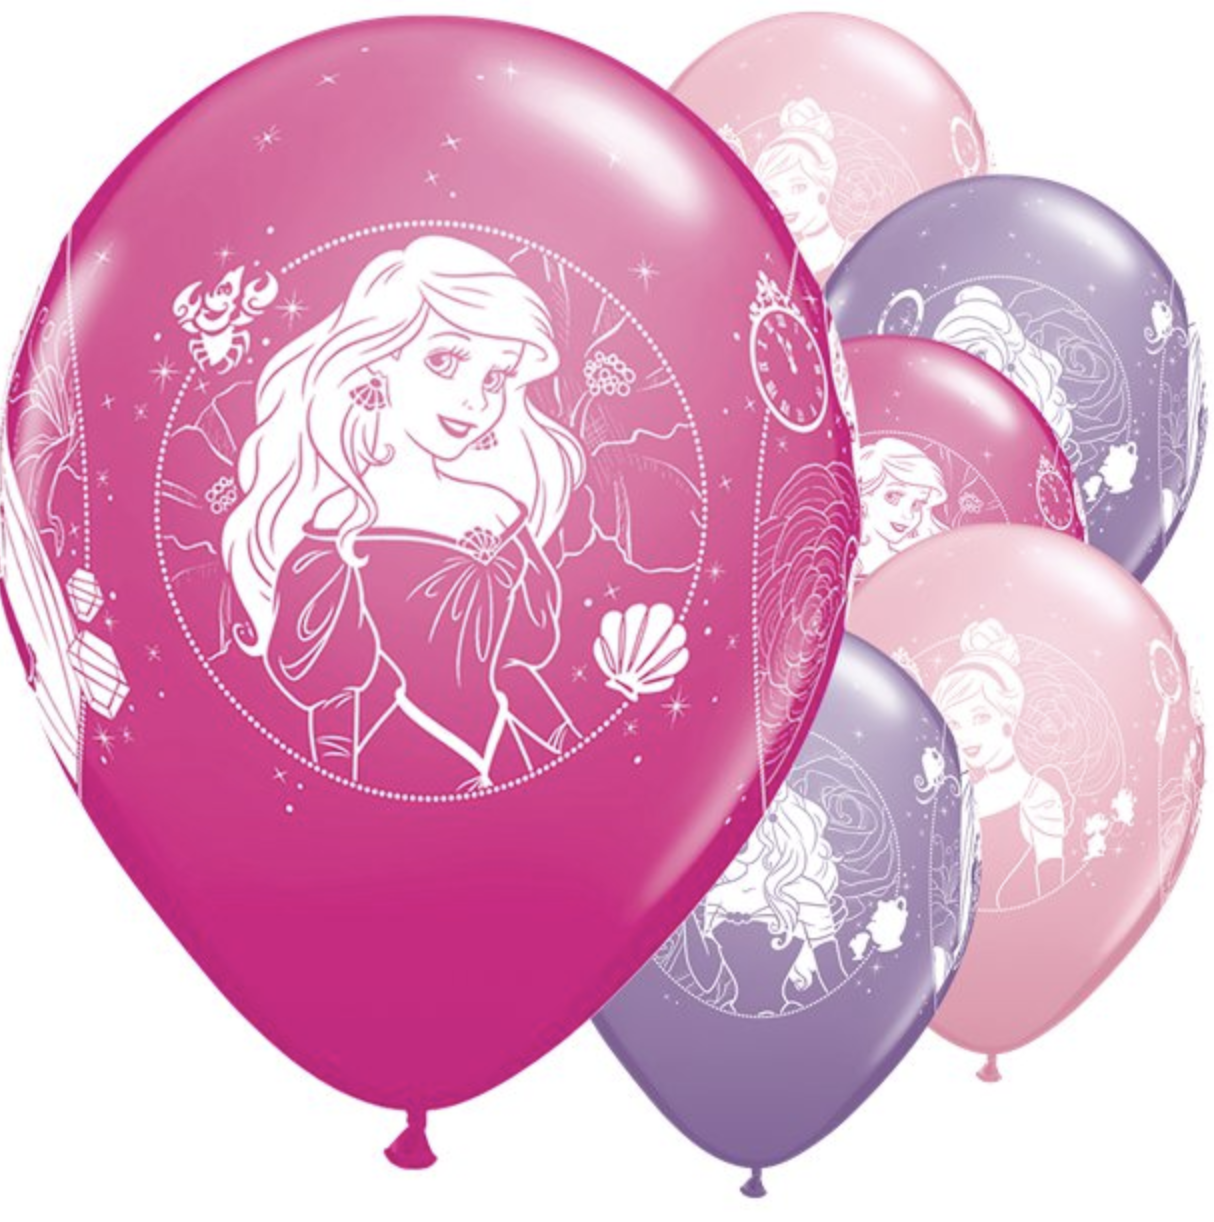 Voorwoord koper staart Disney prinses ballonnen paars - roze | J-STYLE-DECO - J-style-deco.nl |  Online feestwinkel Zeeland